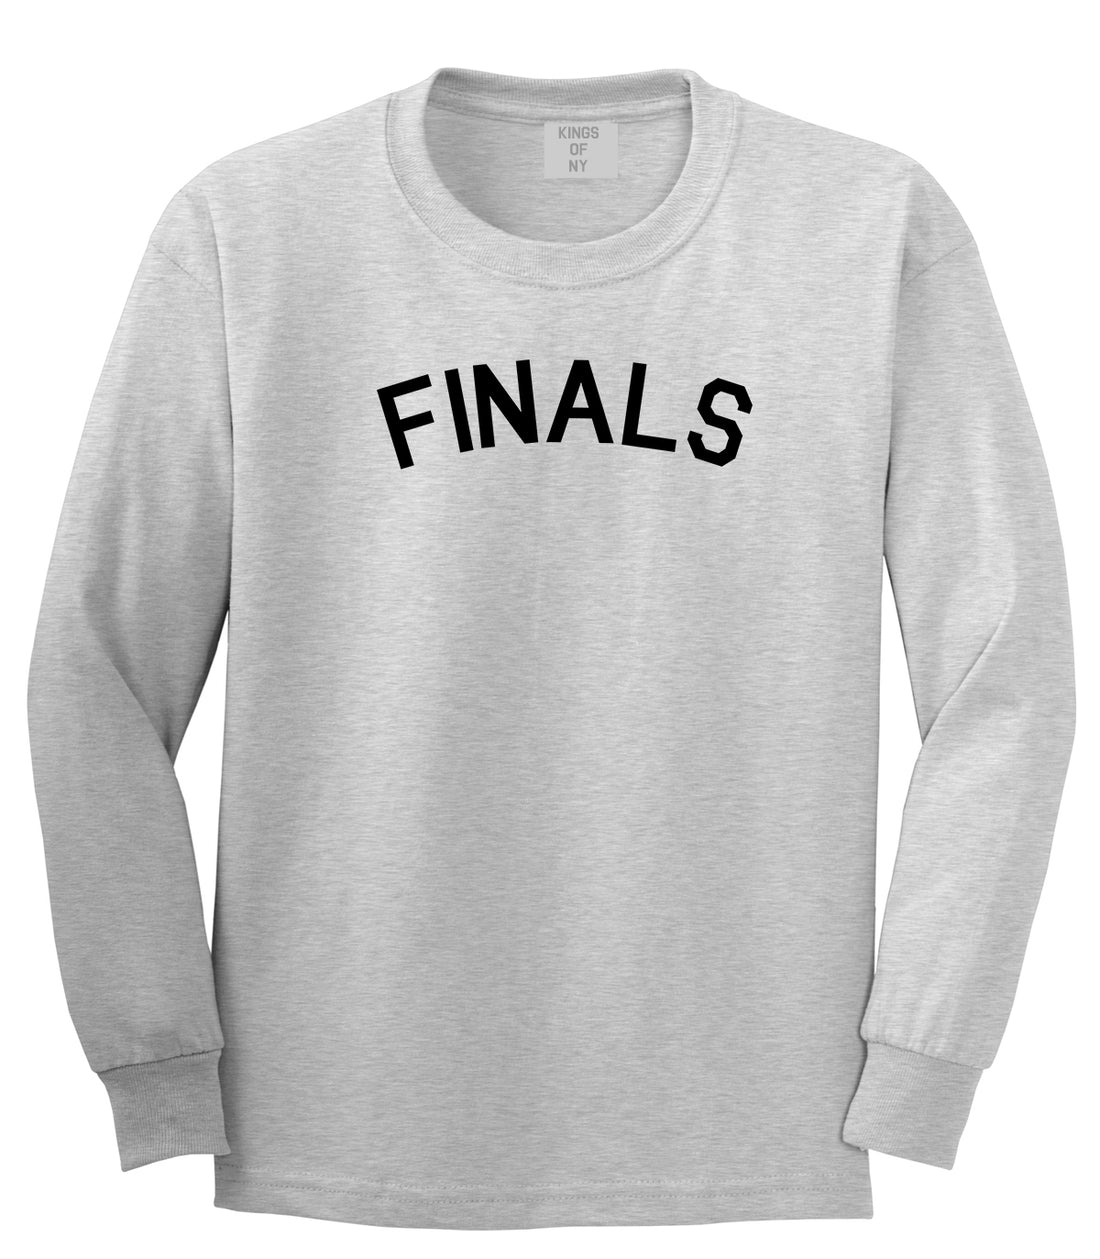 Finals Sports Mens Grey Long Sleeve T-Shirt by KINGS OF NY